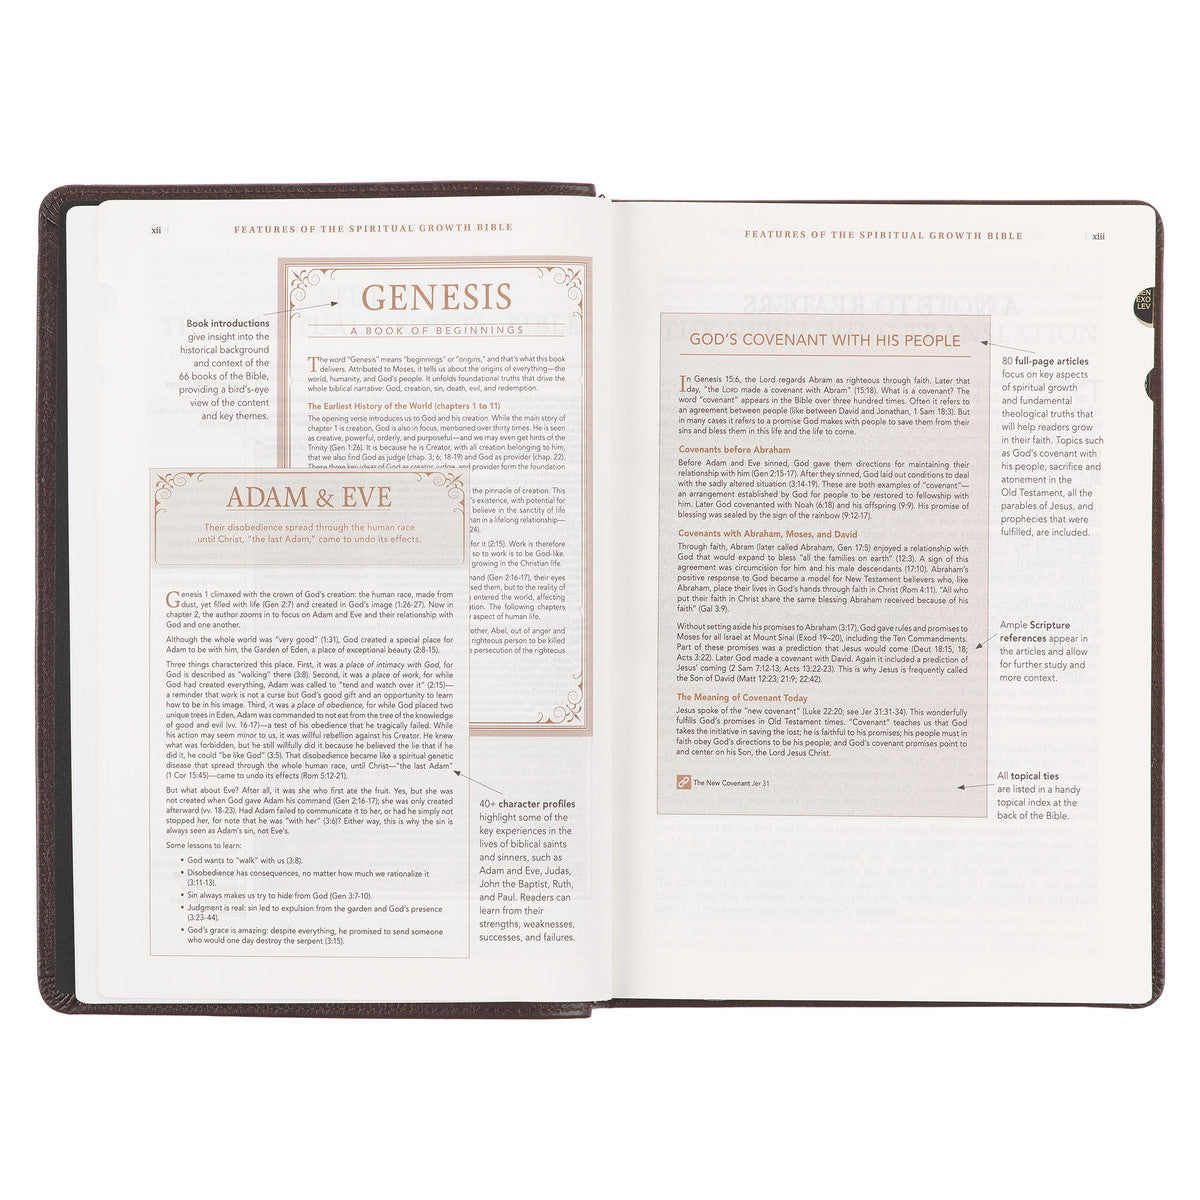 Brown Genuine Leather Spiritual Growth Bible - The Christian Gift Company